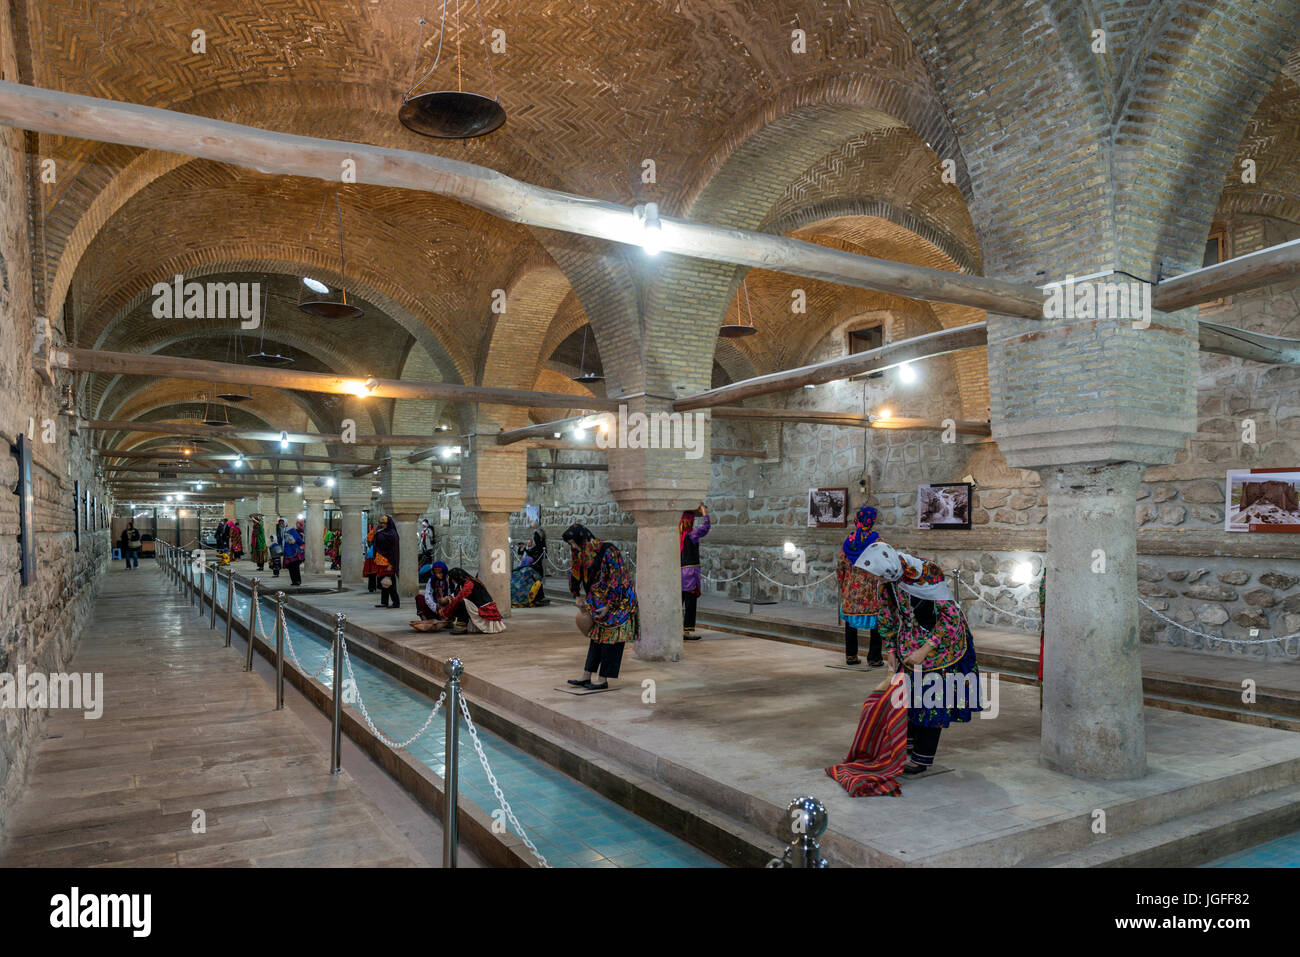 Rakhtshooi Khaneh , Old Laundry Building with mock-up women, Zencan, Iran Stock Photo